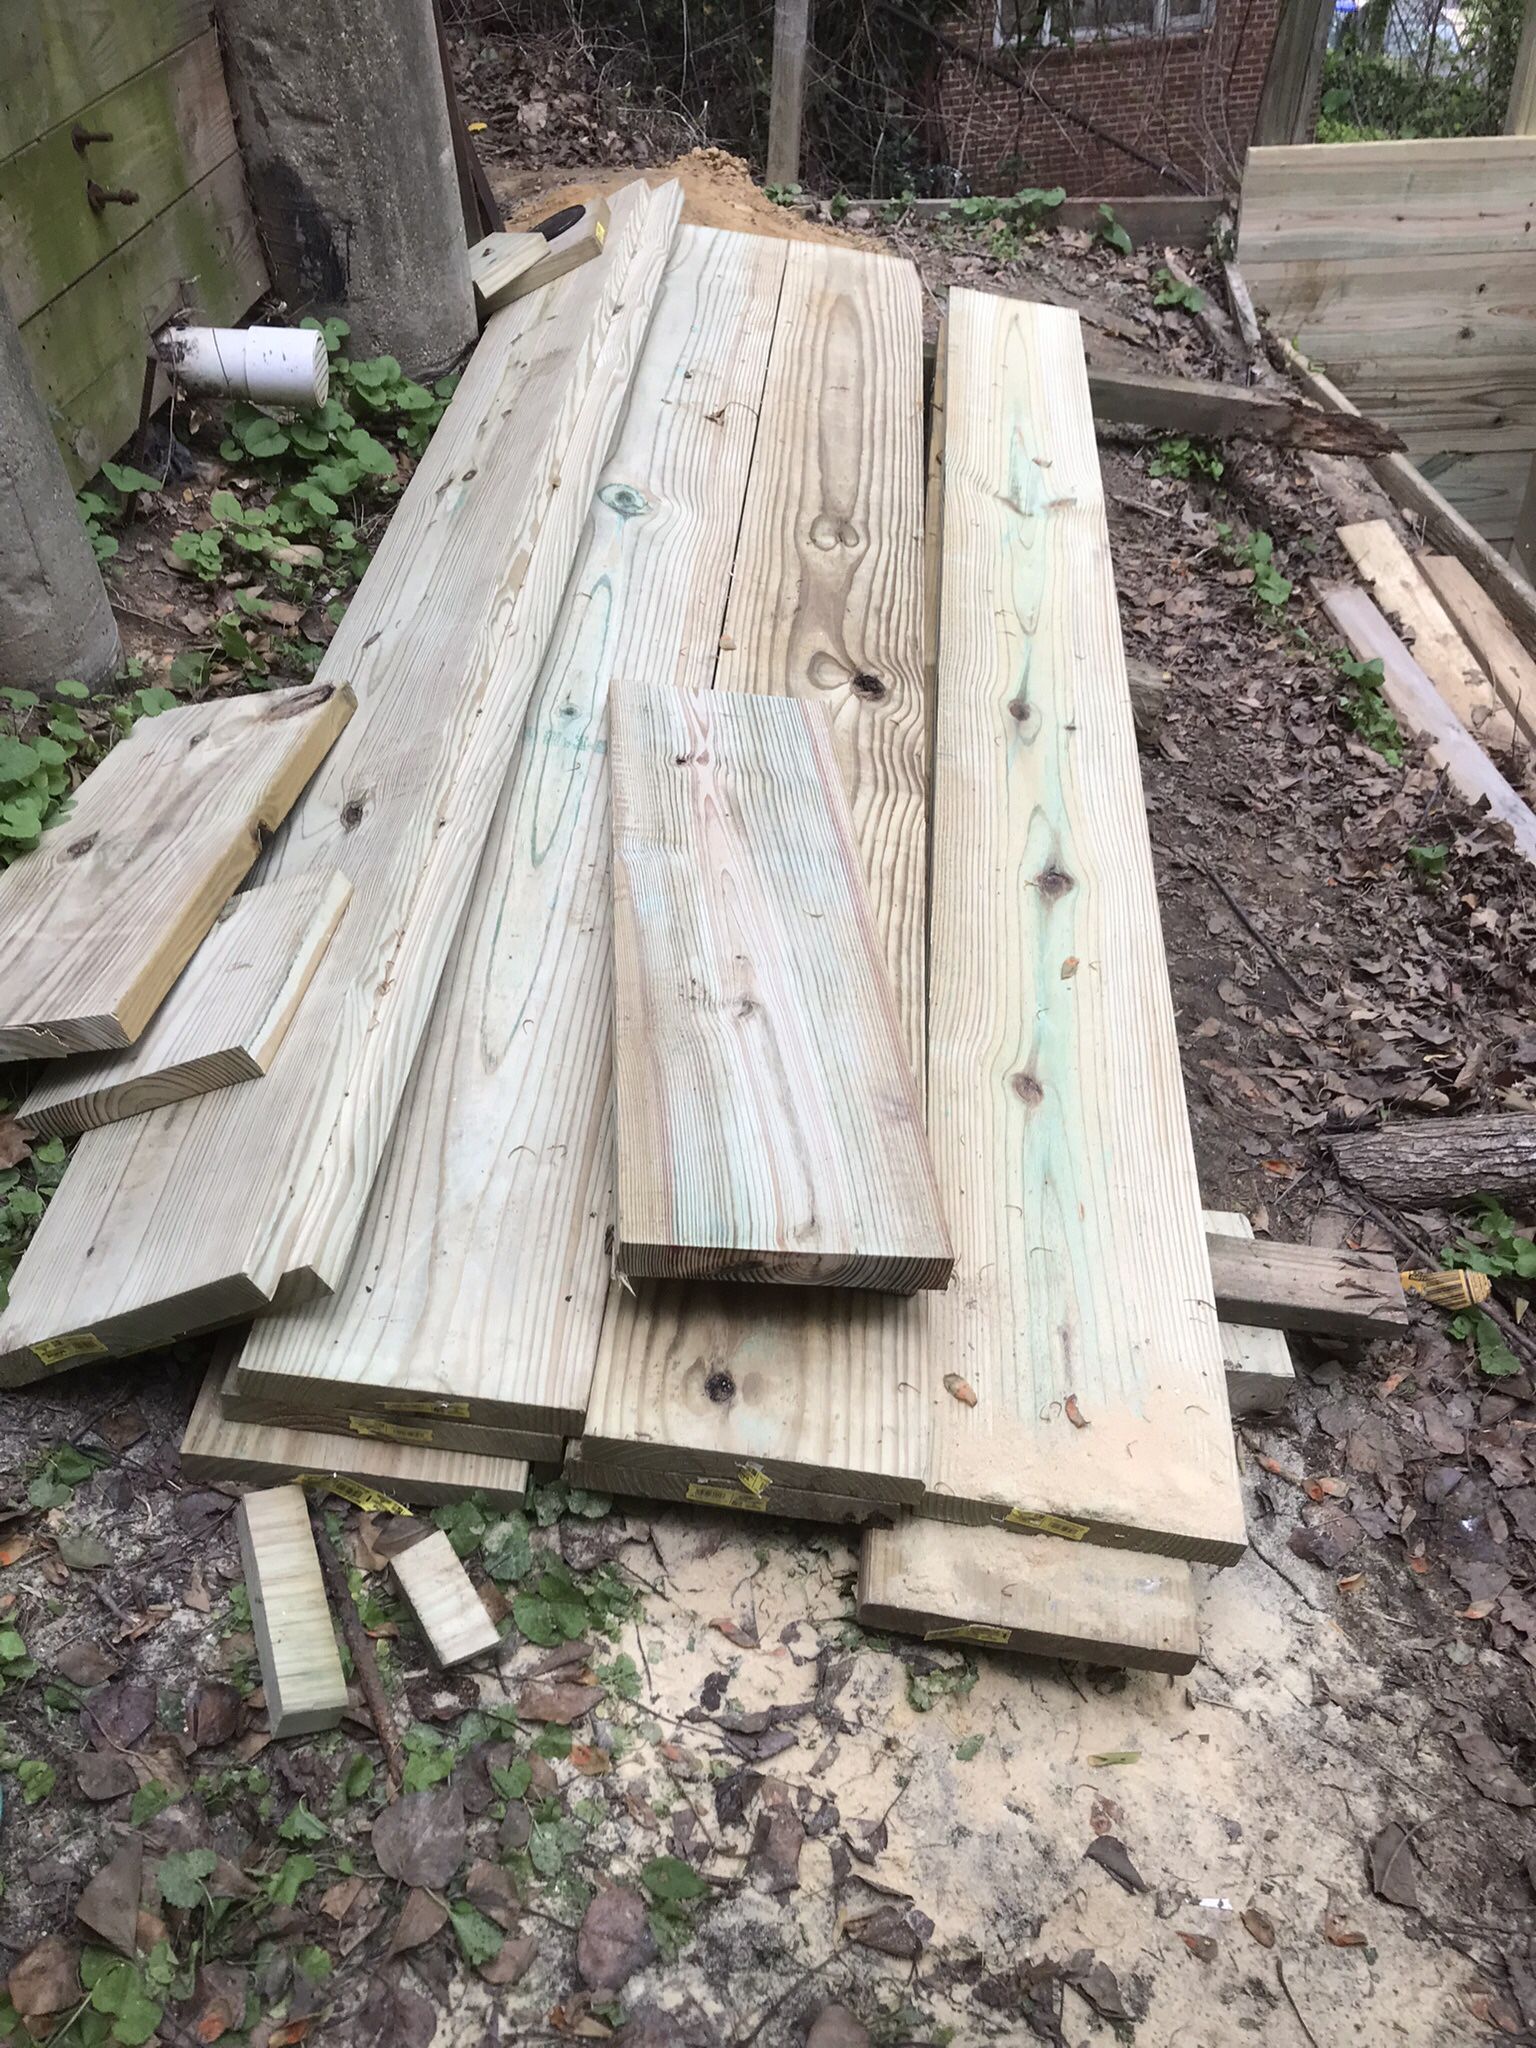 2x12 -10 Feet Long- Pressure treated wood – New A